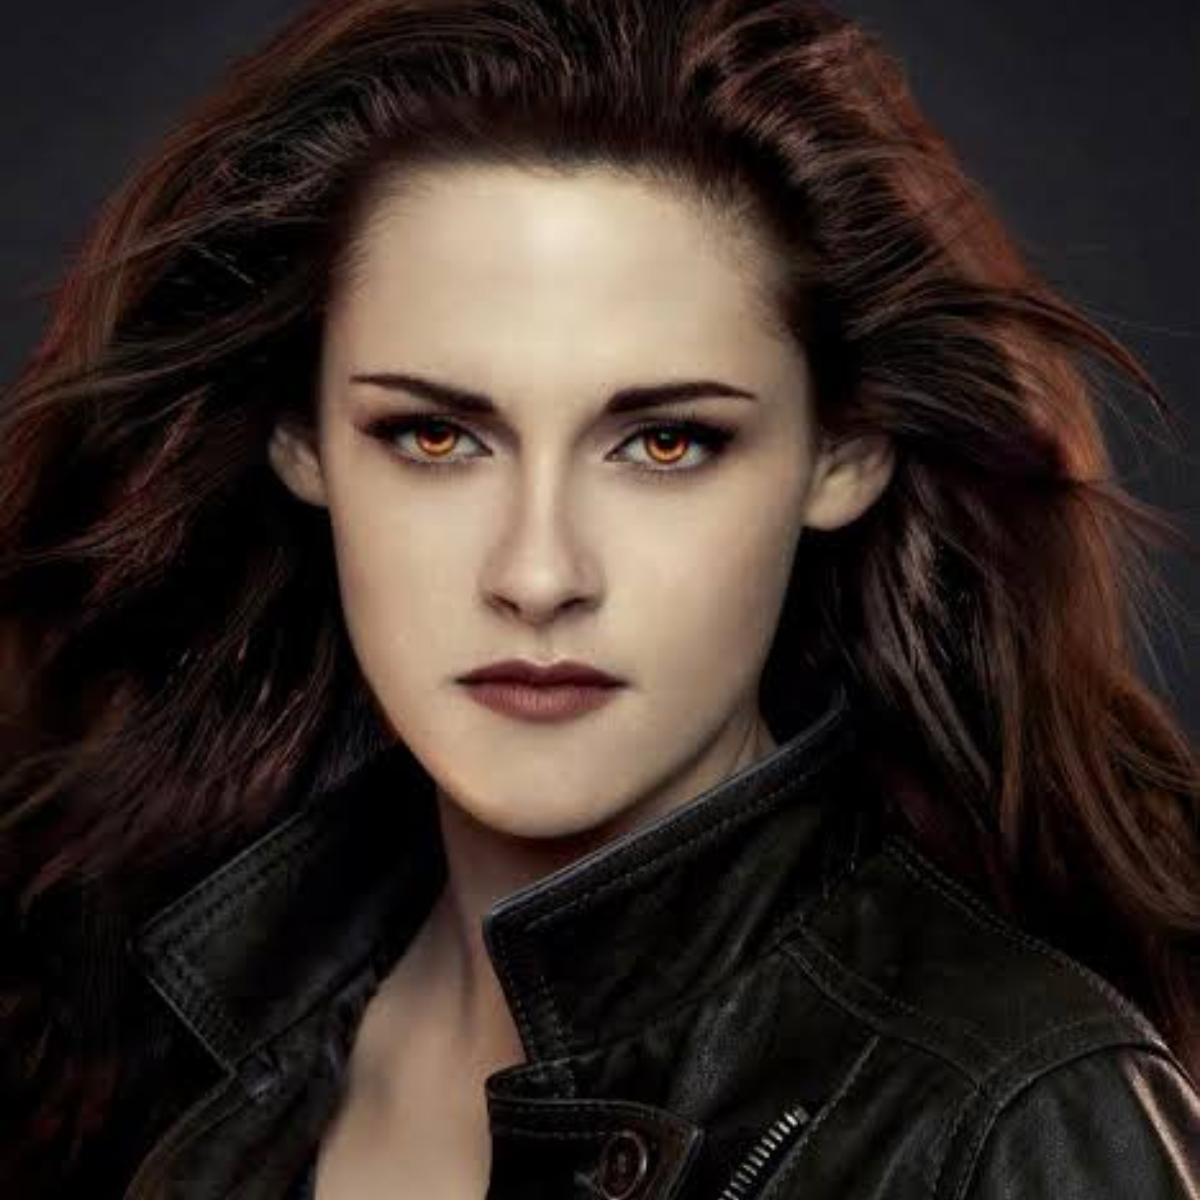 EXCLUSIVE VIDEO: Charlie's Angels: Kristen Stewart REVEALS if Twilight's Bella Swan would make a good angel